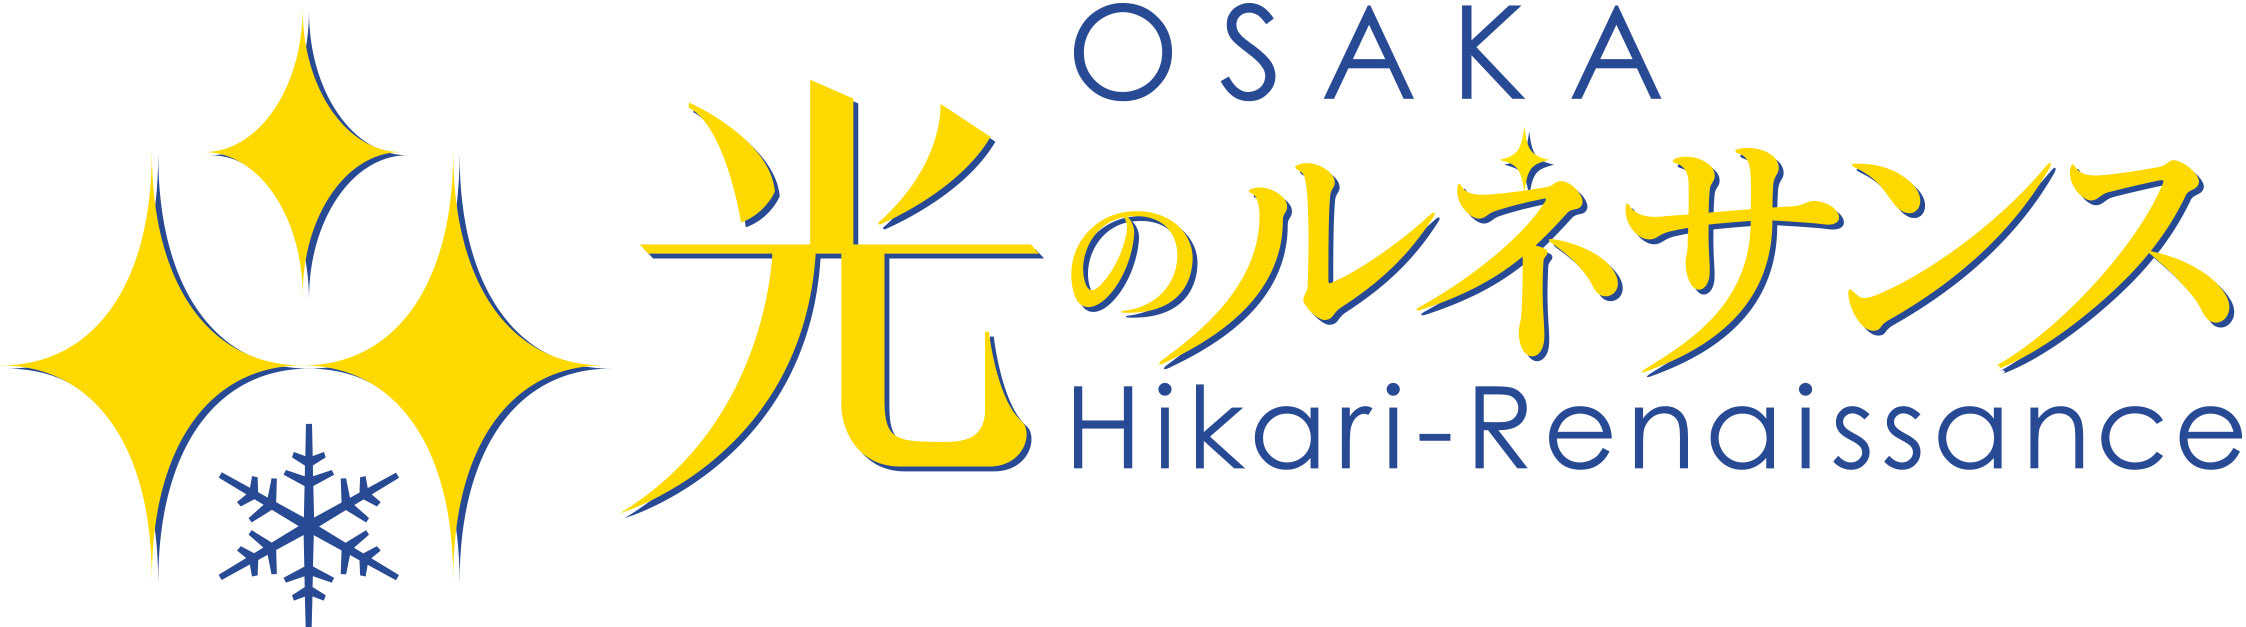 OSAKA光のルネサンス2021 ロゴ03